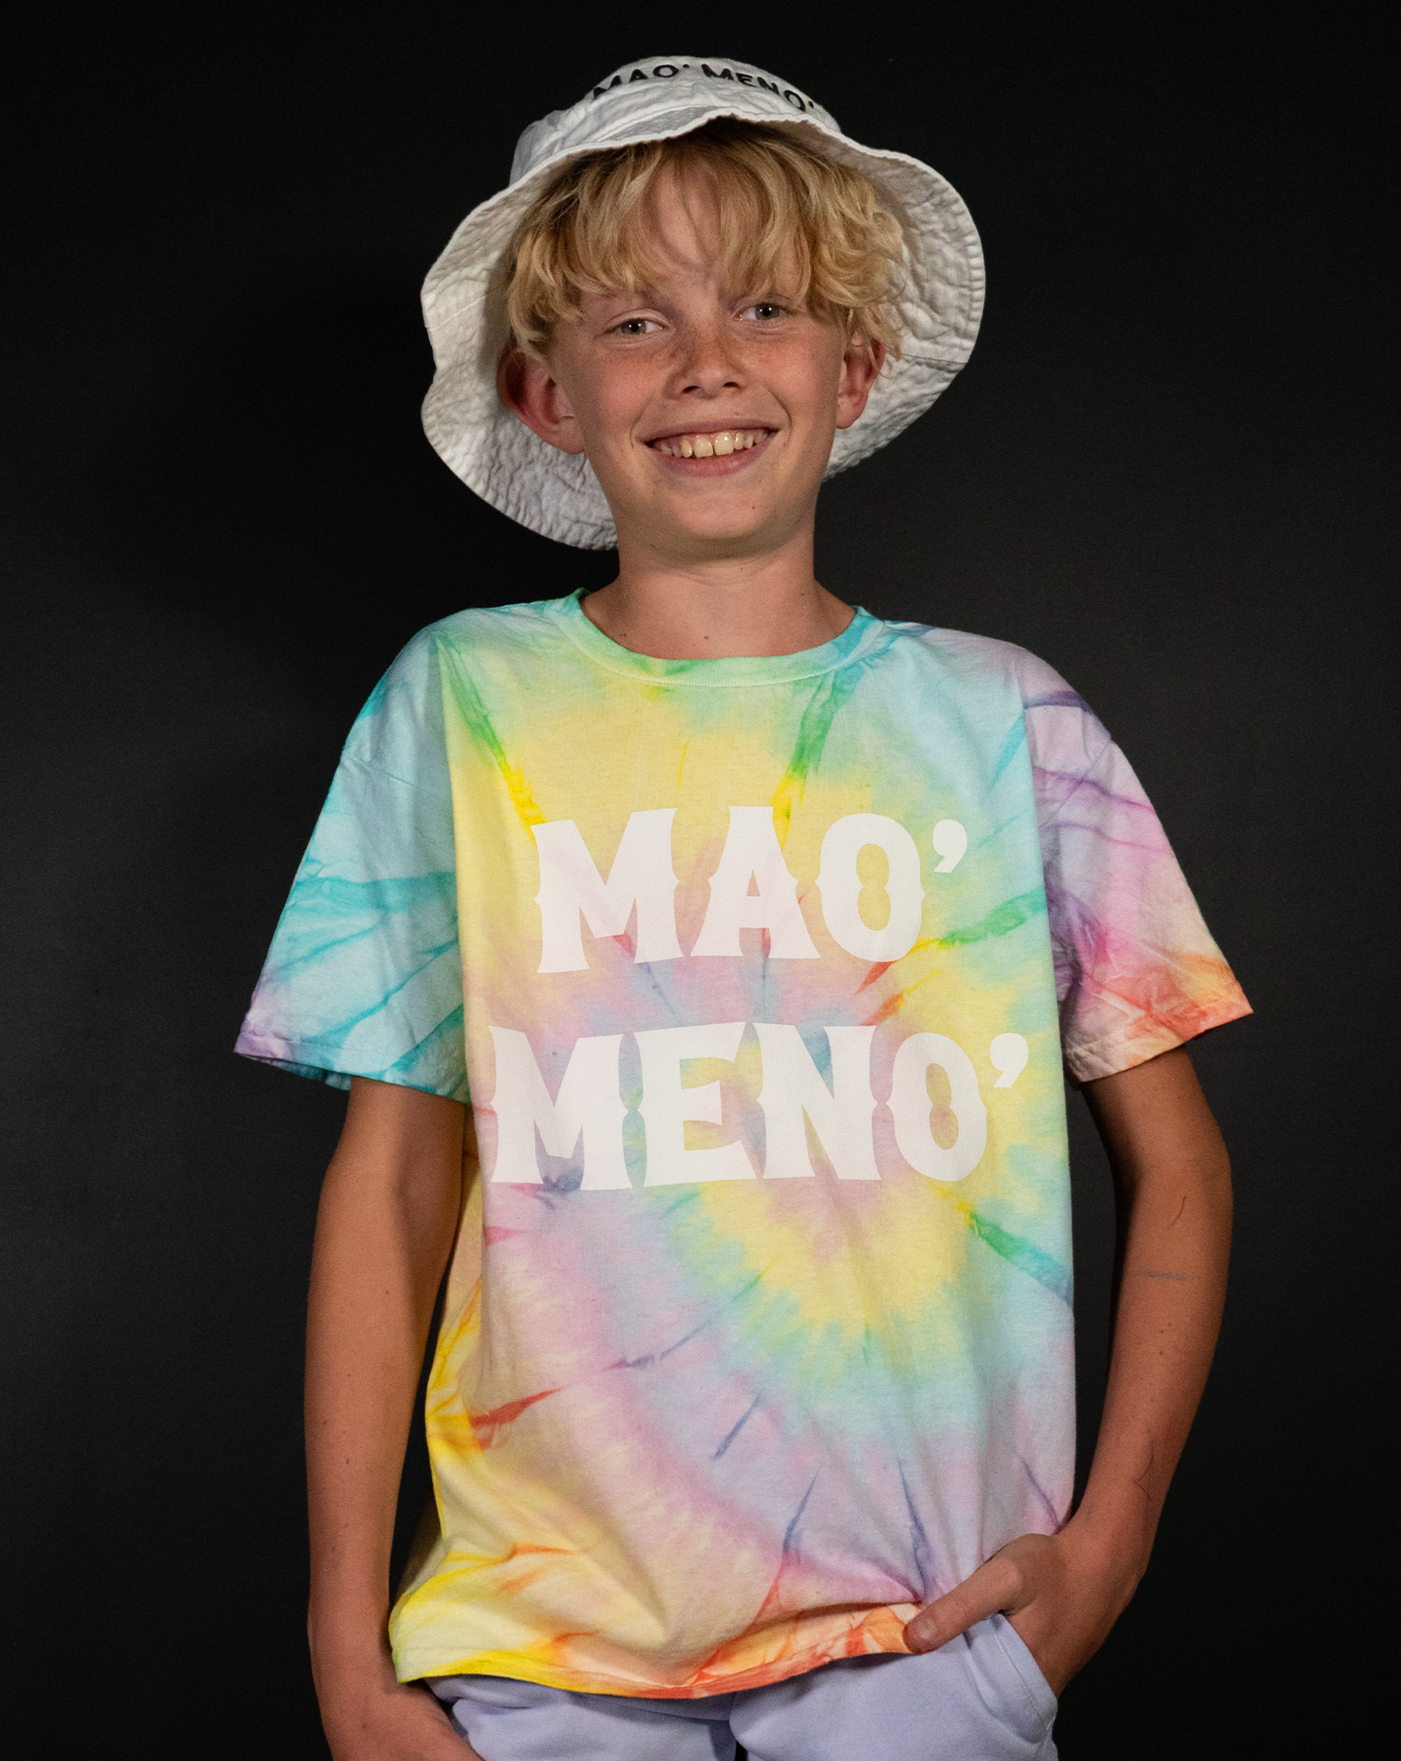 Mao' Meno' Youth Tie-Dye T-Shirt